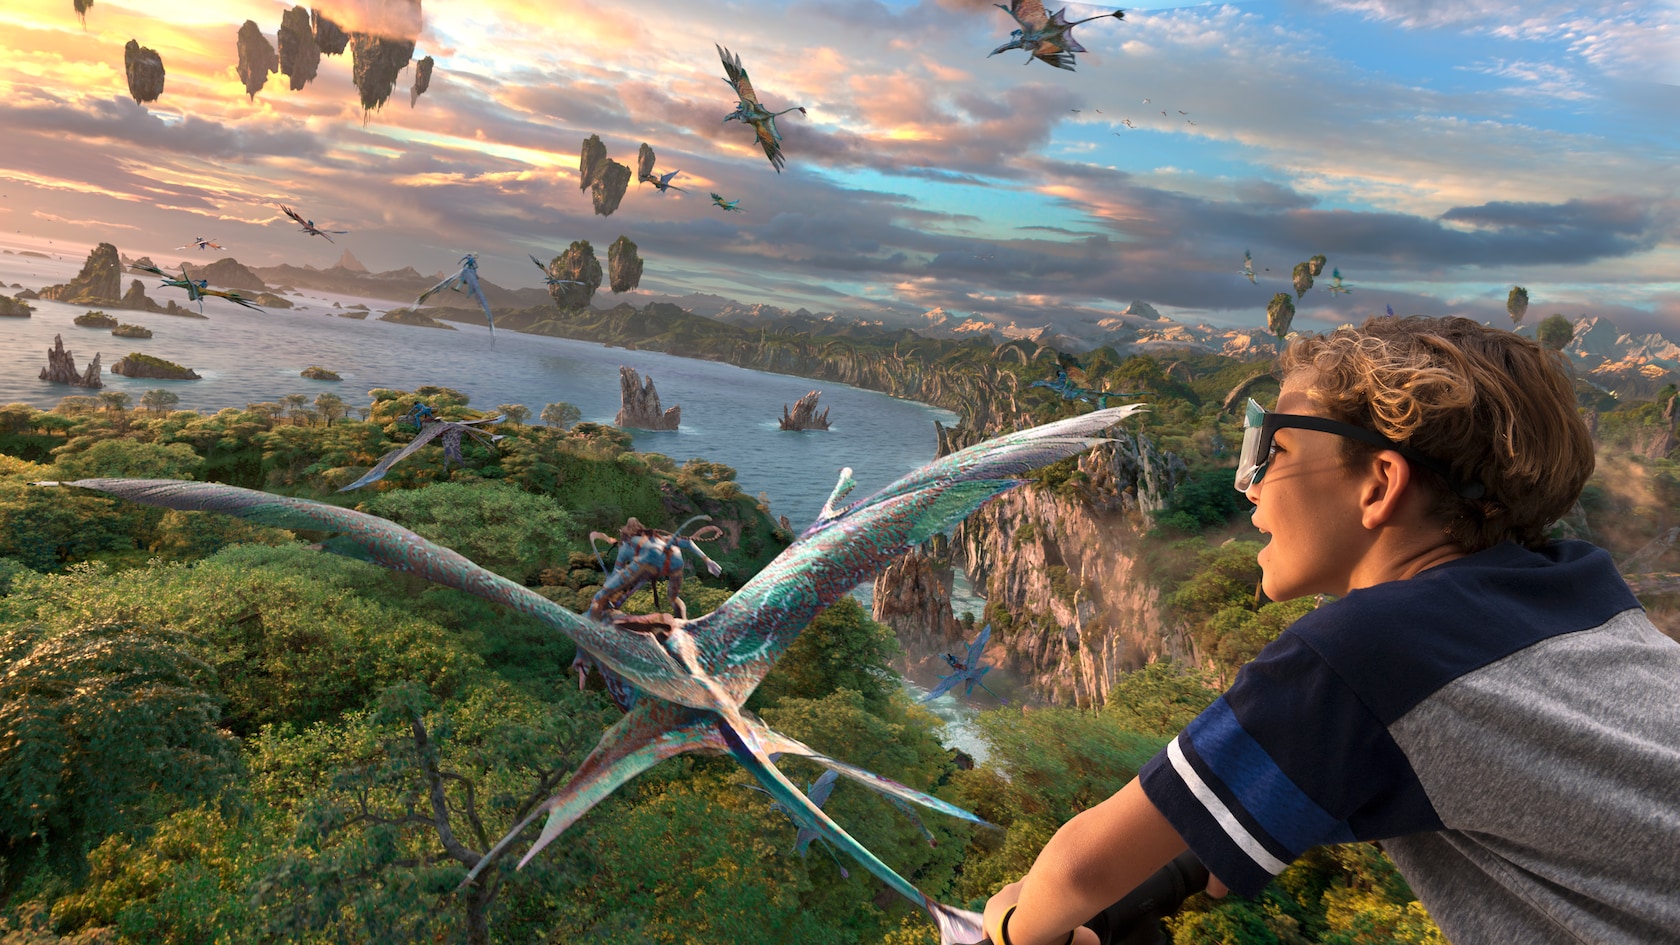 Avatar Flight of Passage vs Soarin' Around the World | WDWMAGIC -  Unofficial Walt Disney World discussion forums